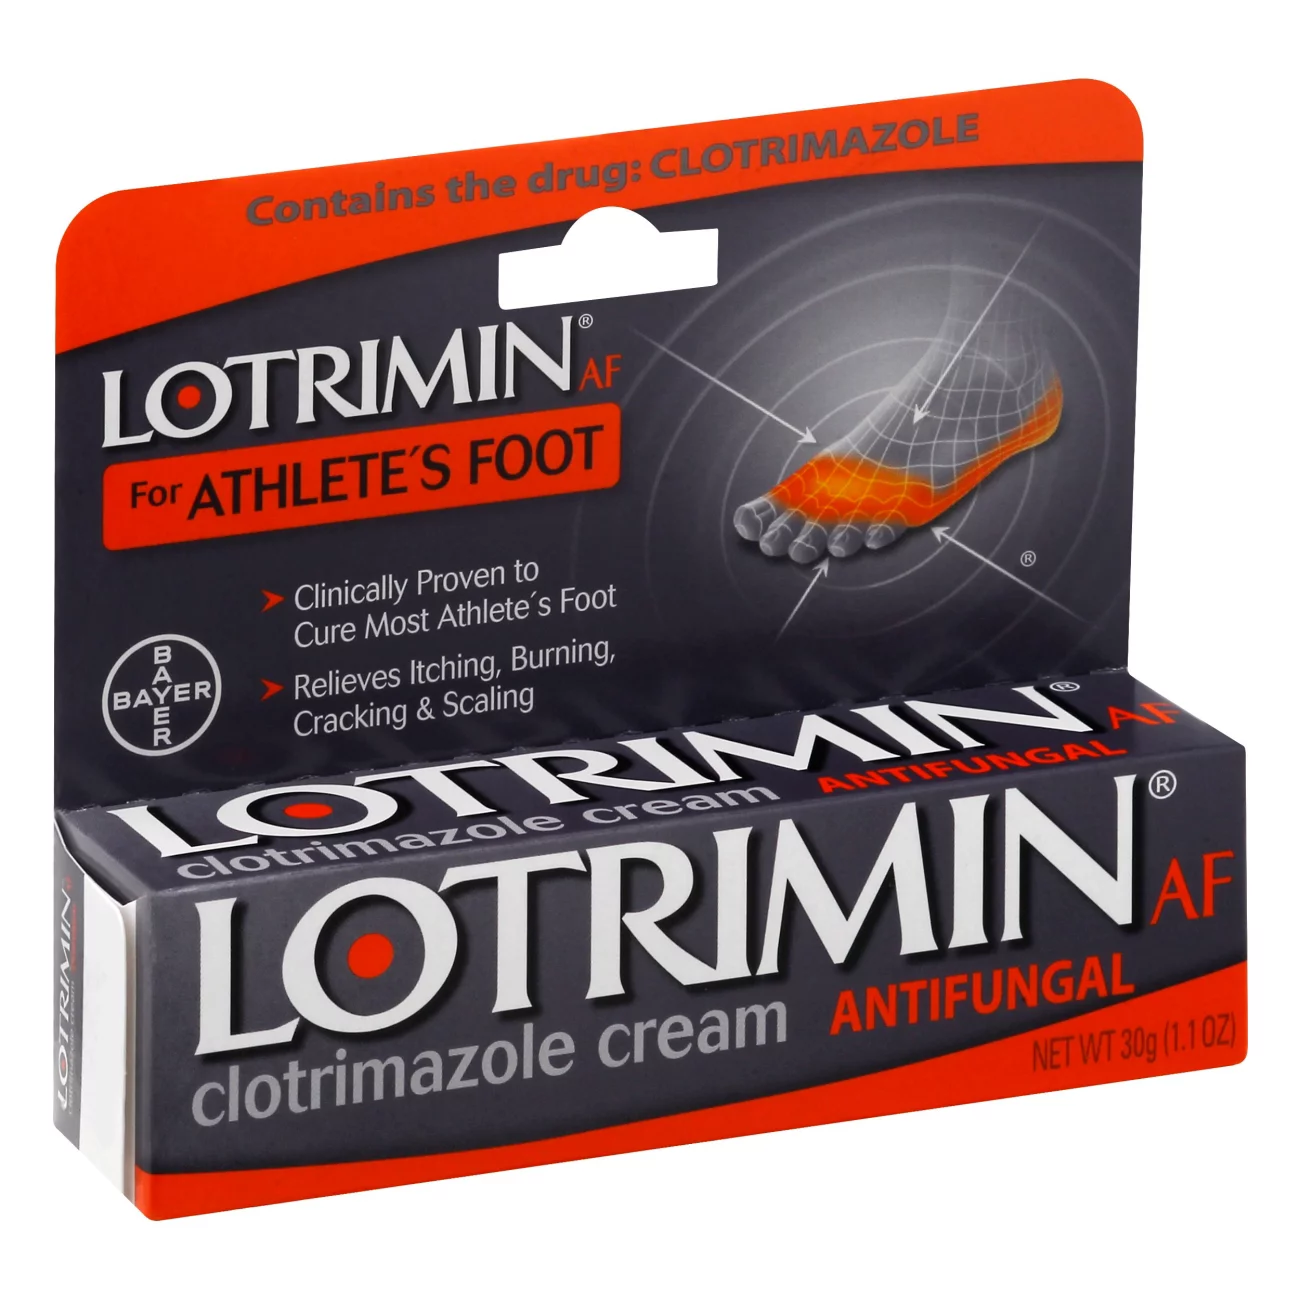 Lotrimin AF Cream for Athletes Foot - Clotrimazole Antifungal Treatment